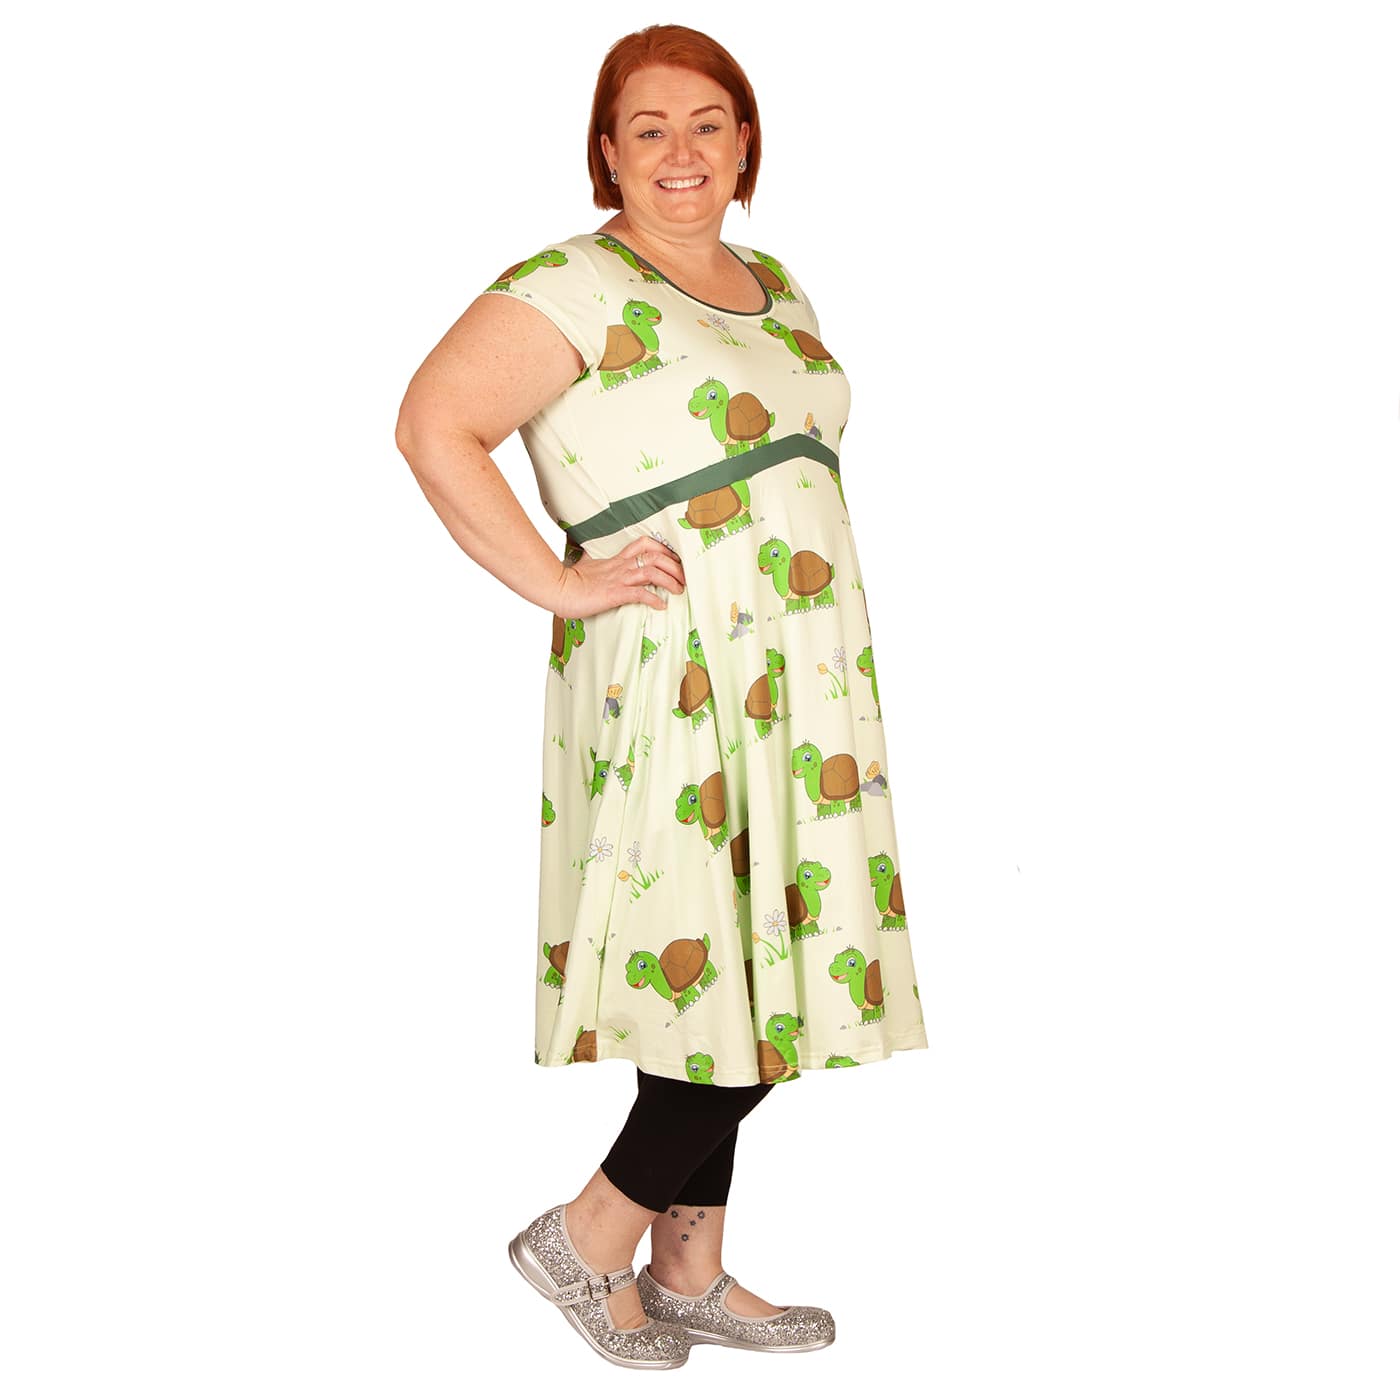 Wisdom Tea Dress by RainbowsAndFairies.com.au (Tortoise - Turtle - Animal Print - Dress With Pockets - Mod Retro - Vintage Inspired - Kitsch) - SKU: CL_TEADR_WISDO_ORG - Pic-05